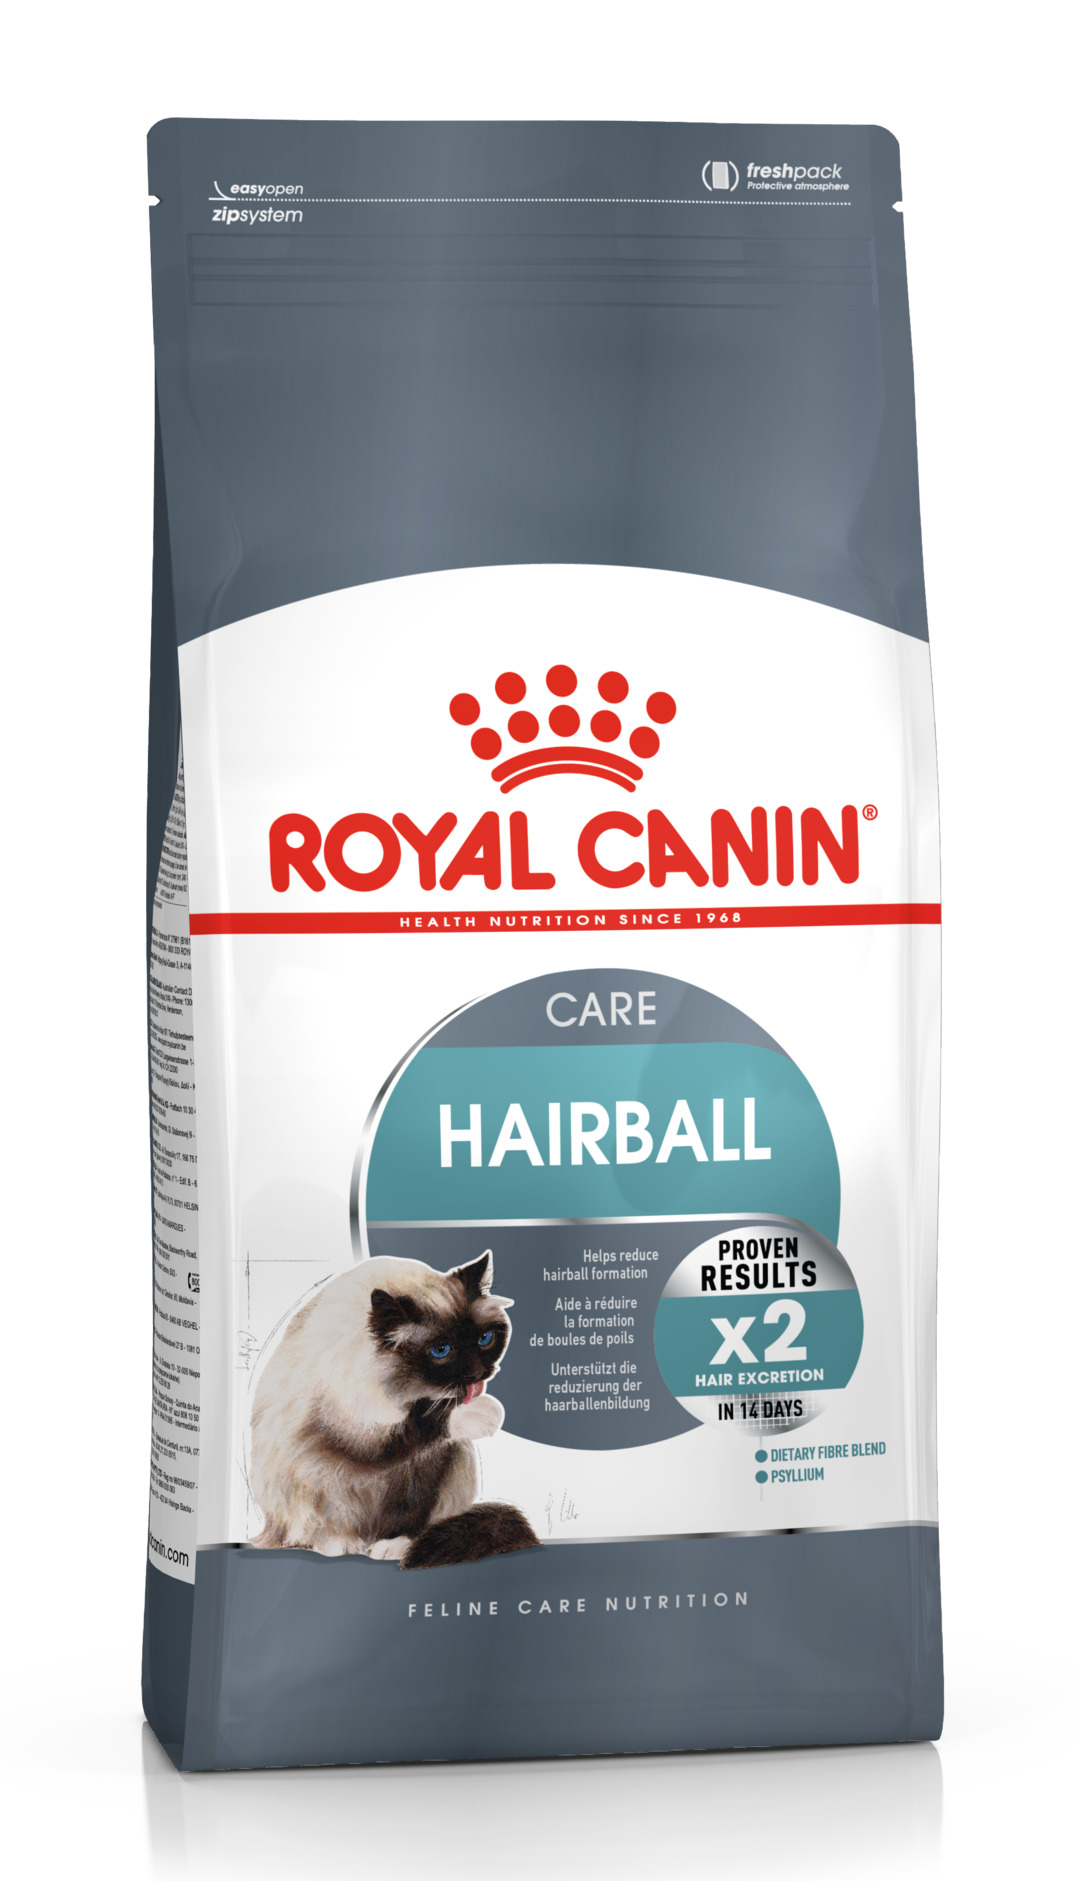 Royal Canin Intense Hairball 34